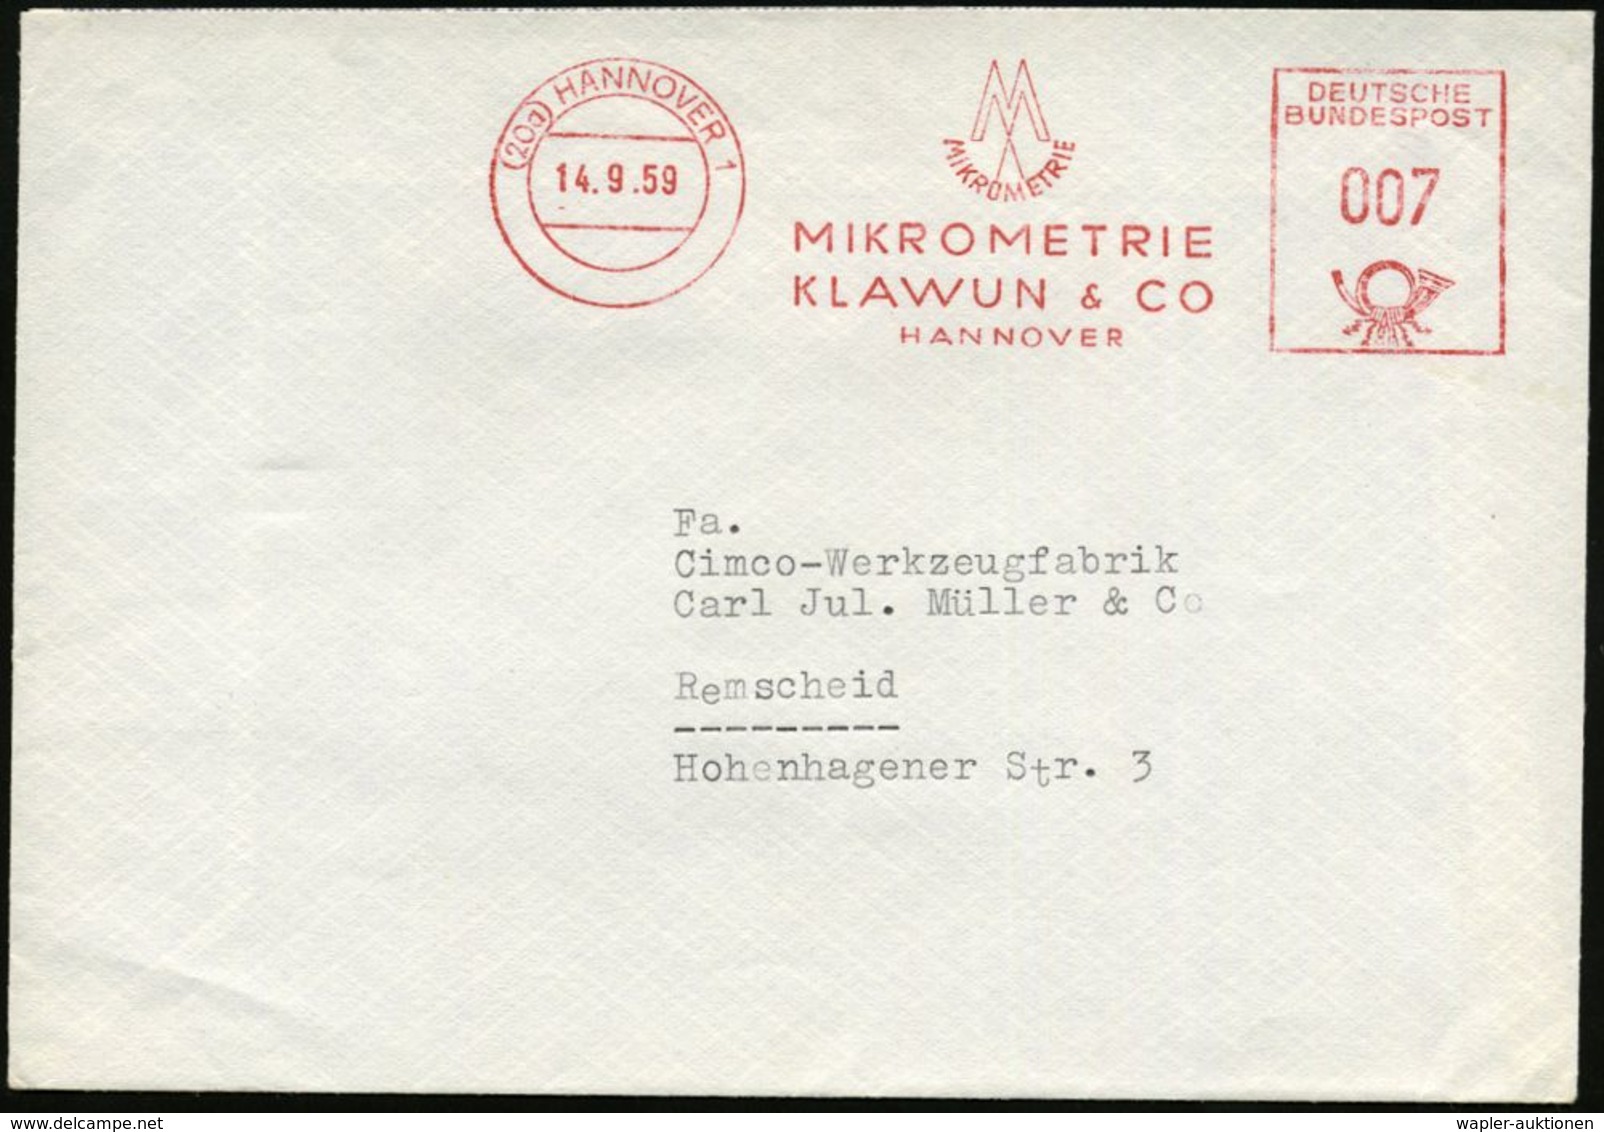 MATHEMATIK / RECHNEN / ZAHLEN / GEOMETRIE : (20a) HANNOVER 1/ MIKROMETRIE/ KLAWUN & CO 1959 (14.9.) AFS (Monogramm-Logo) - Non Classés